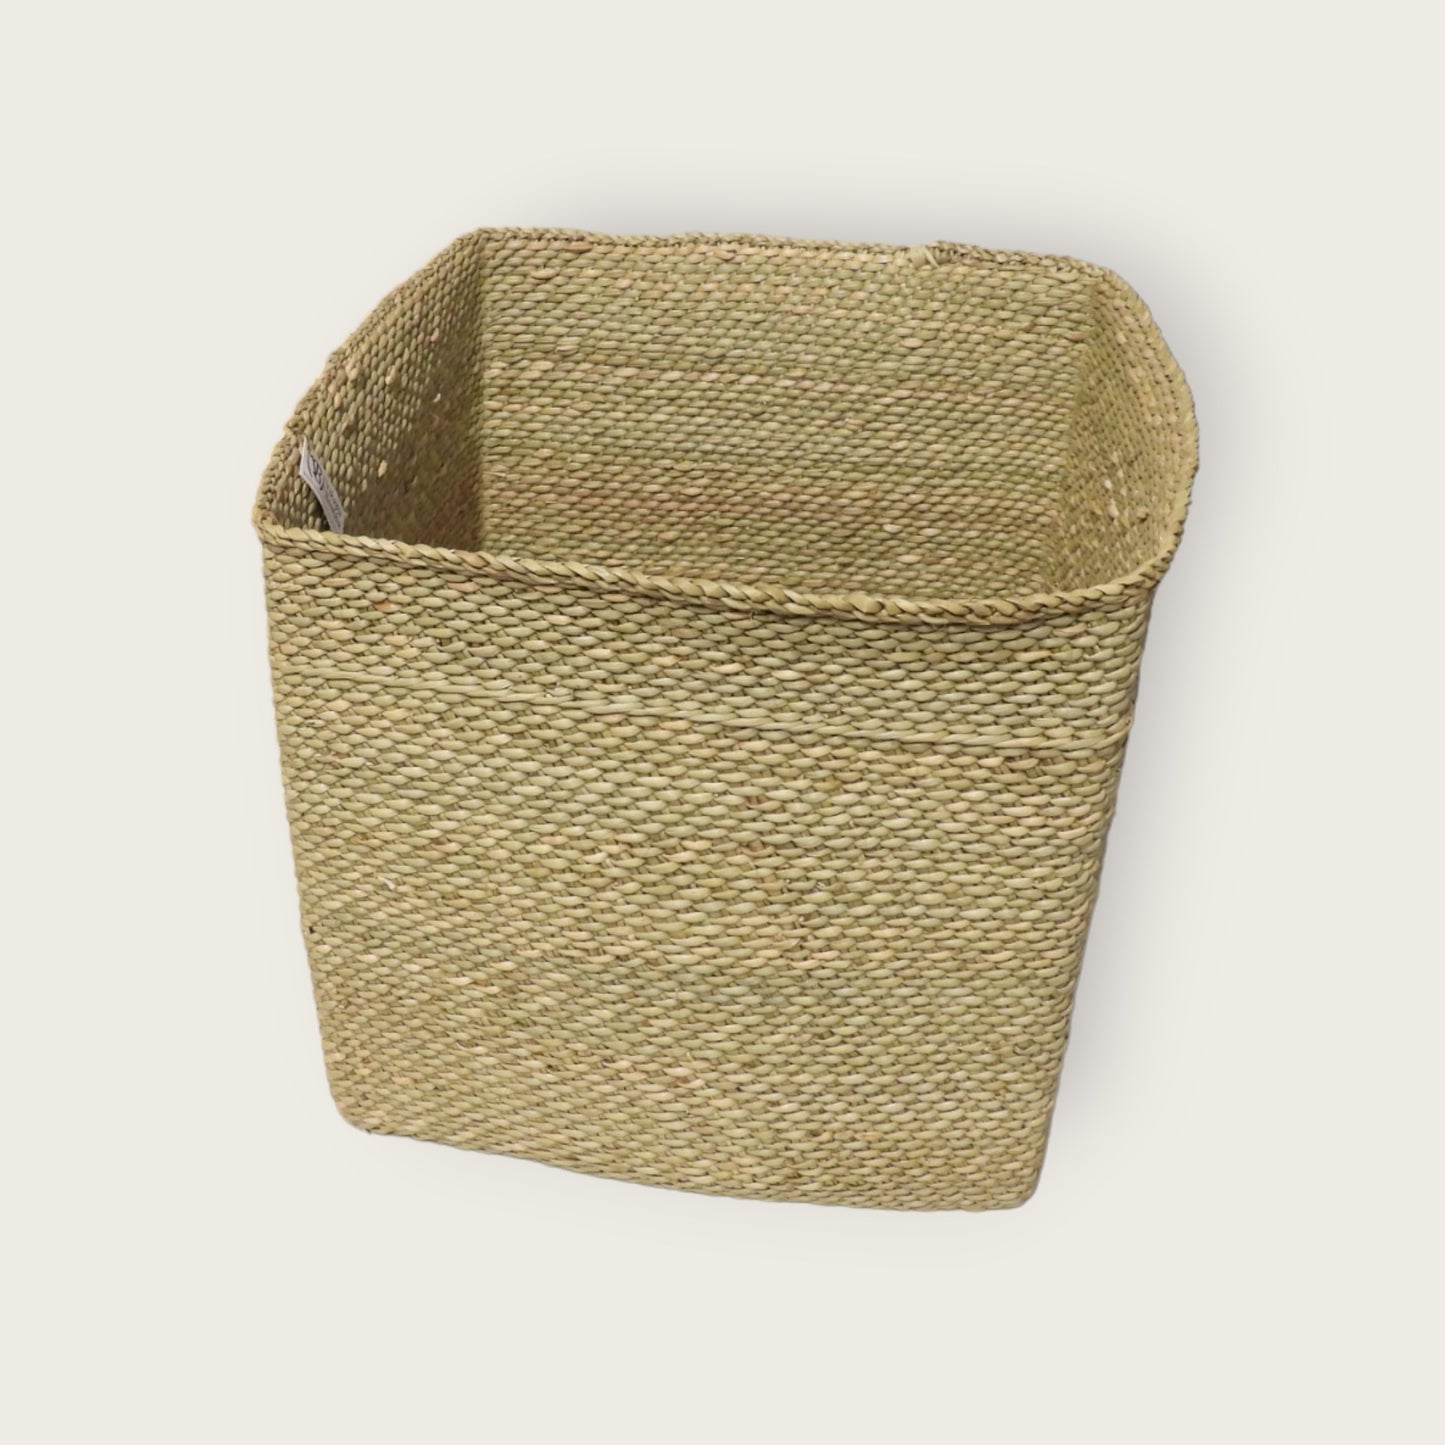 PEMBE Basket - Natural